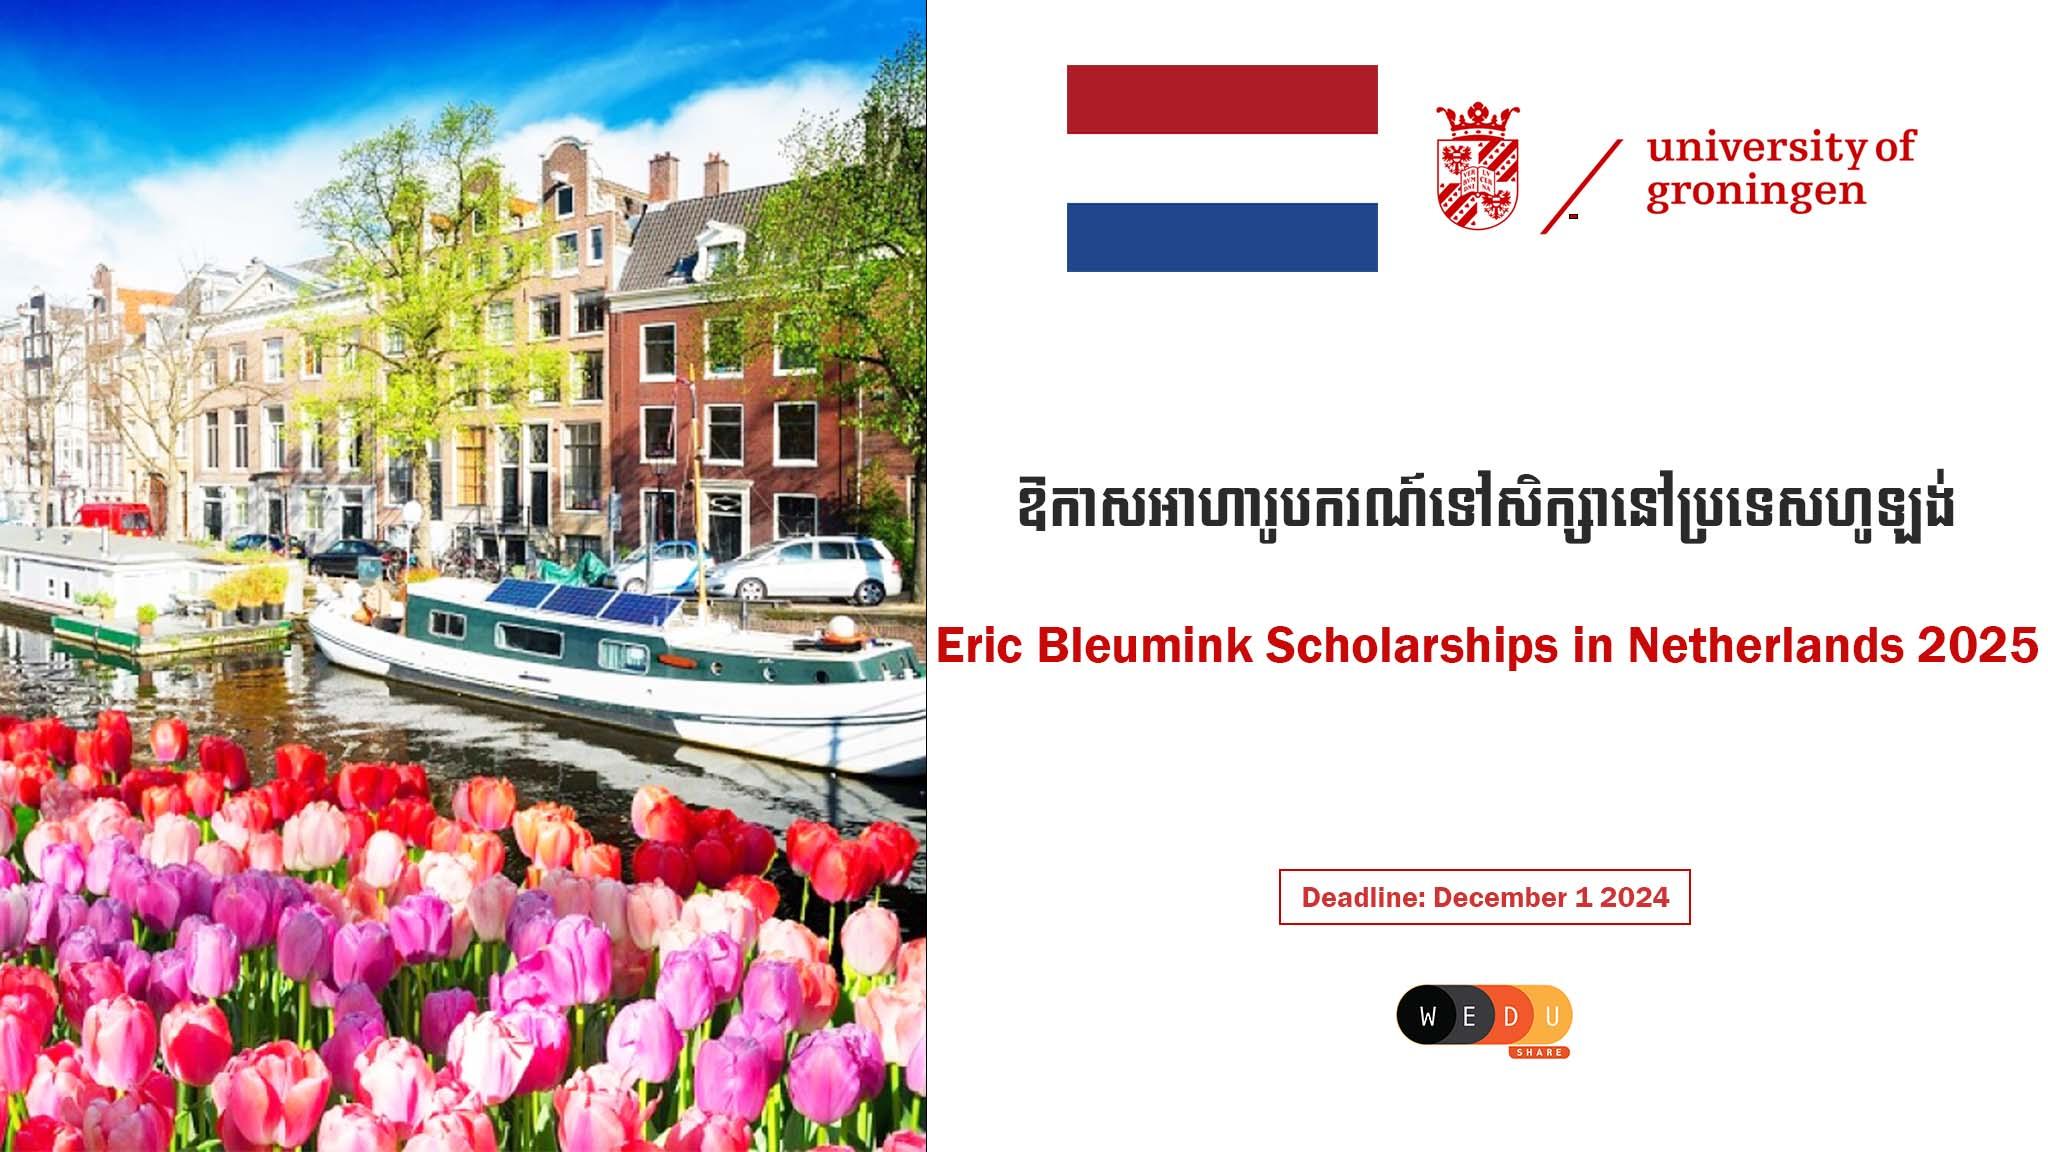 Eric Bleumink Scholarships in Netherlands 2025